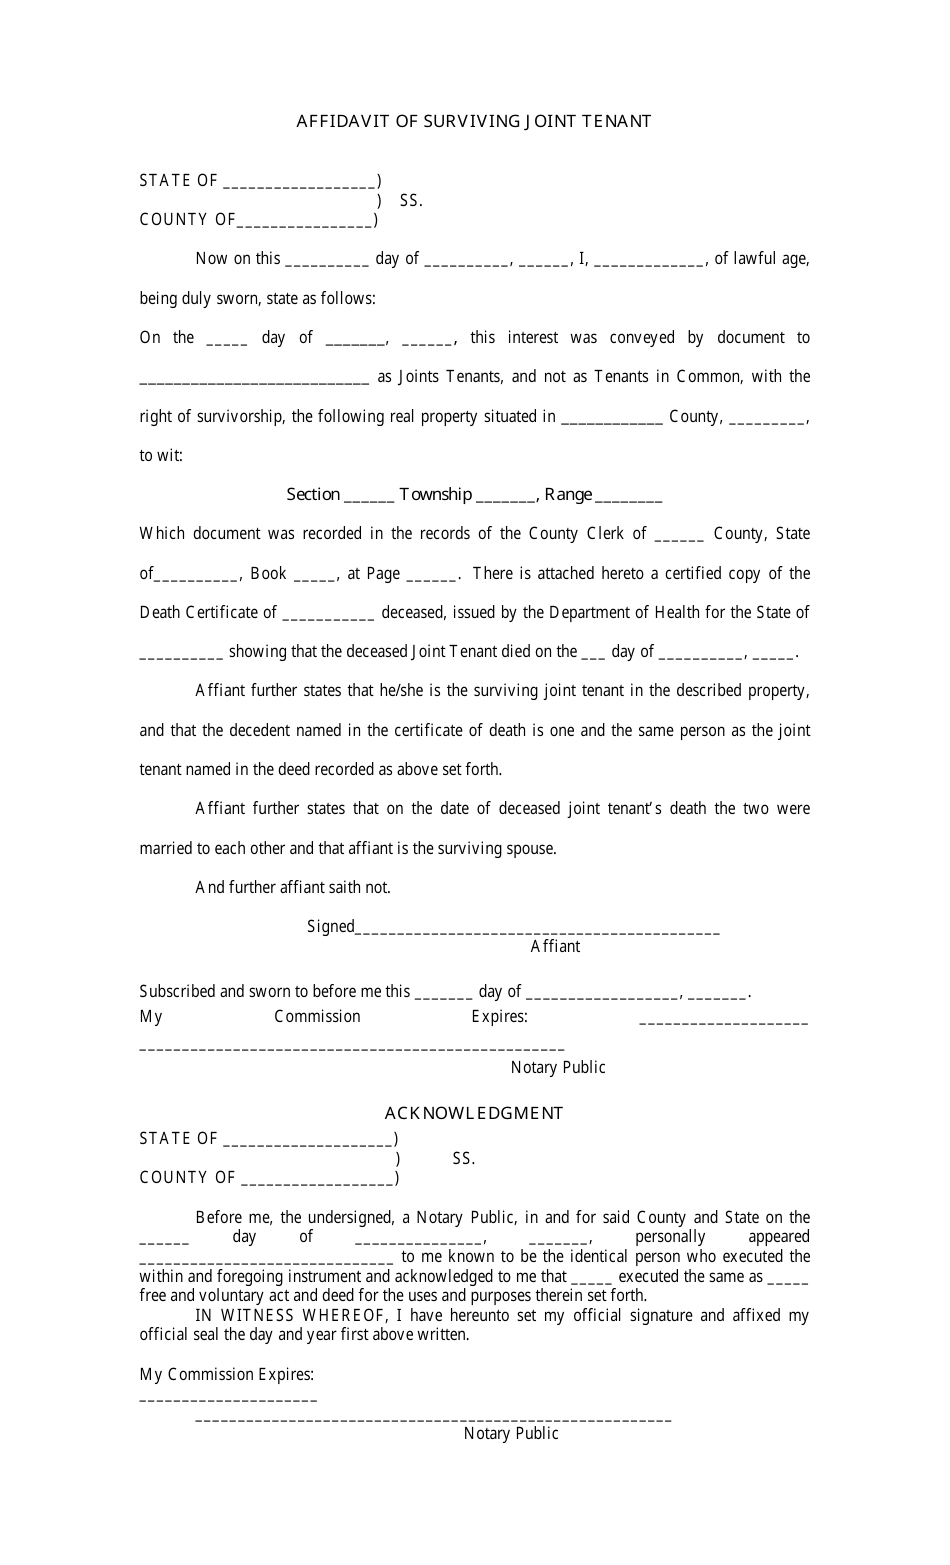 Affidavit of Surviving Joint Tenant Form, Page 1